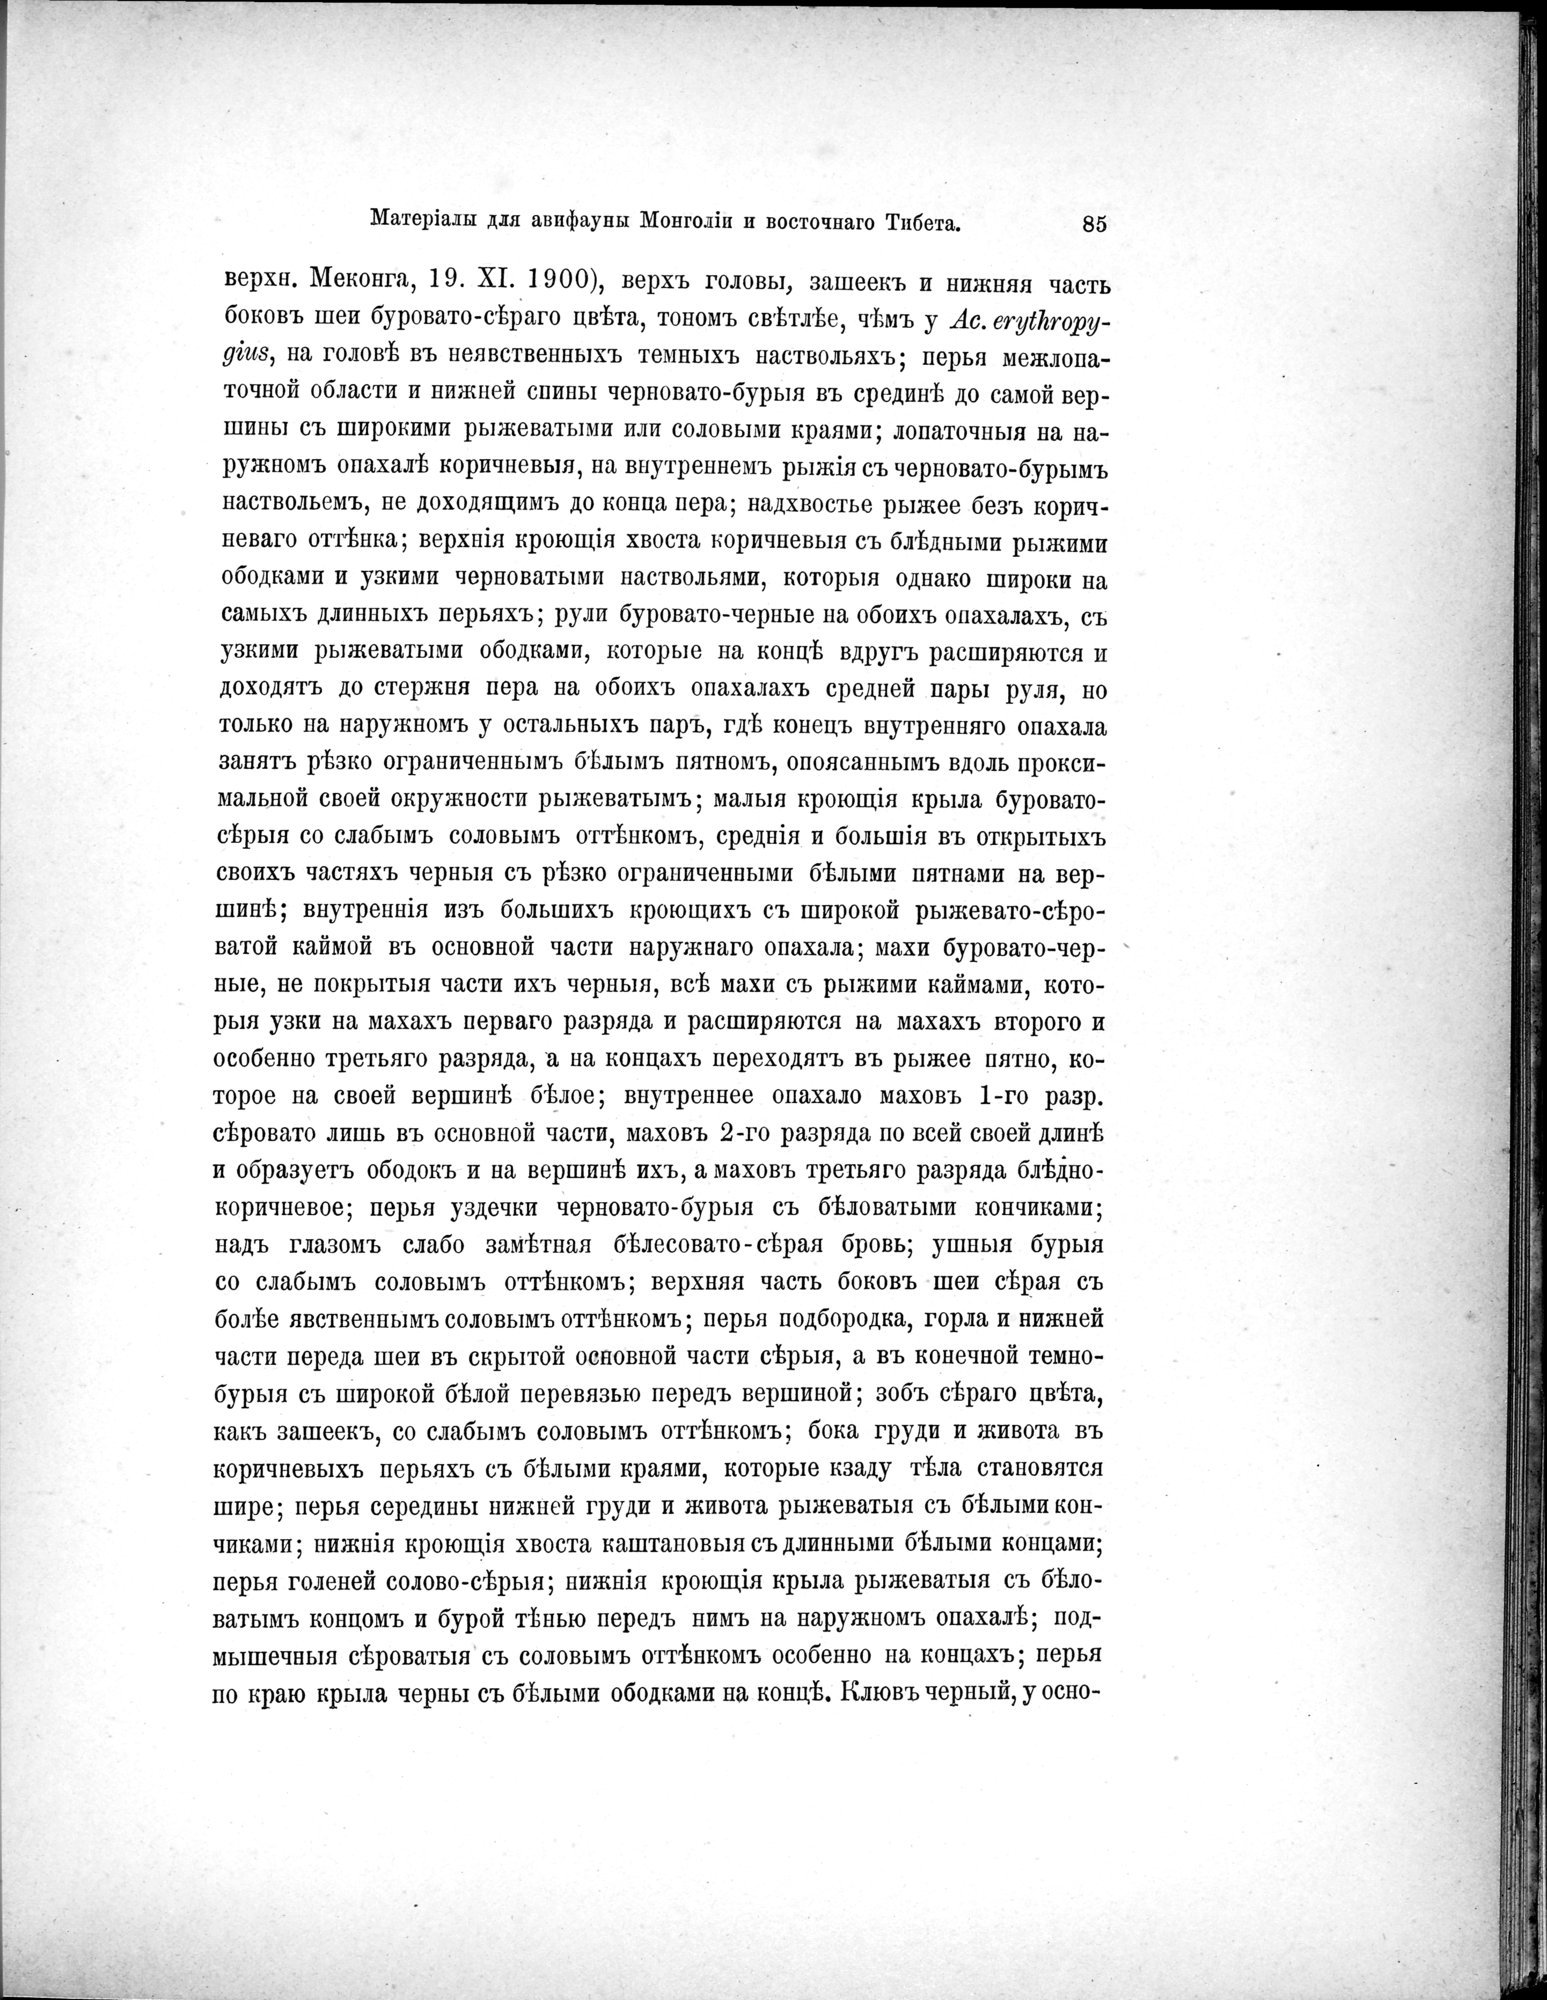 Mongoliia i Kam : vol.5 / Page 157 (Grayscale High Resolution Image)